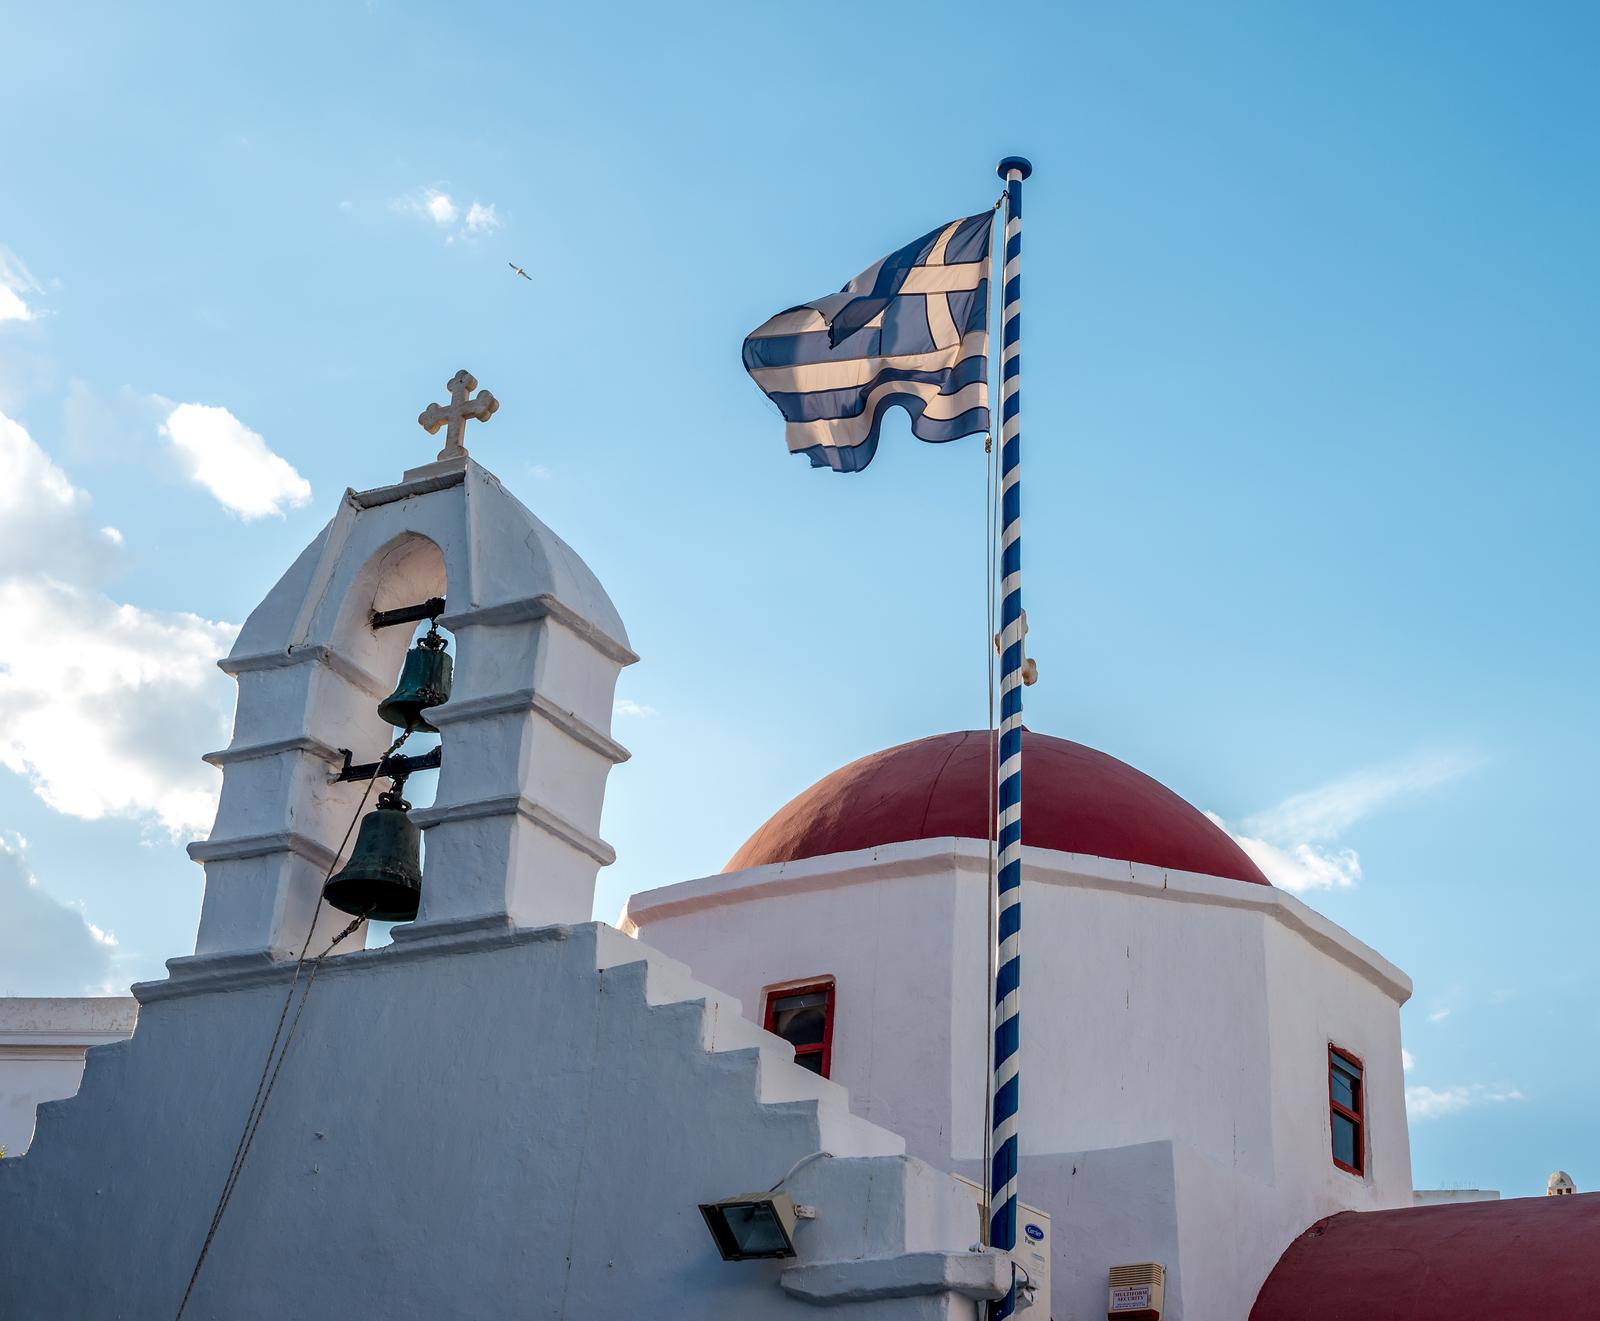 Agia Kyriaki Orthodox church with red dome and Greek flag waving against blue sky on the Mykonos island, Greece